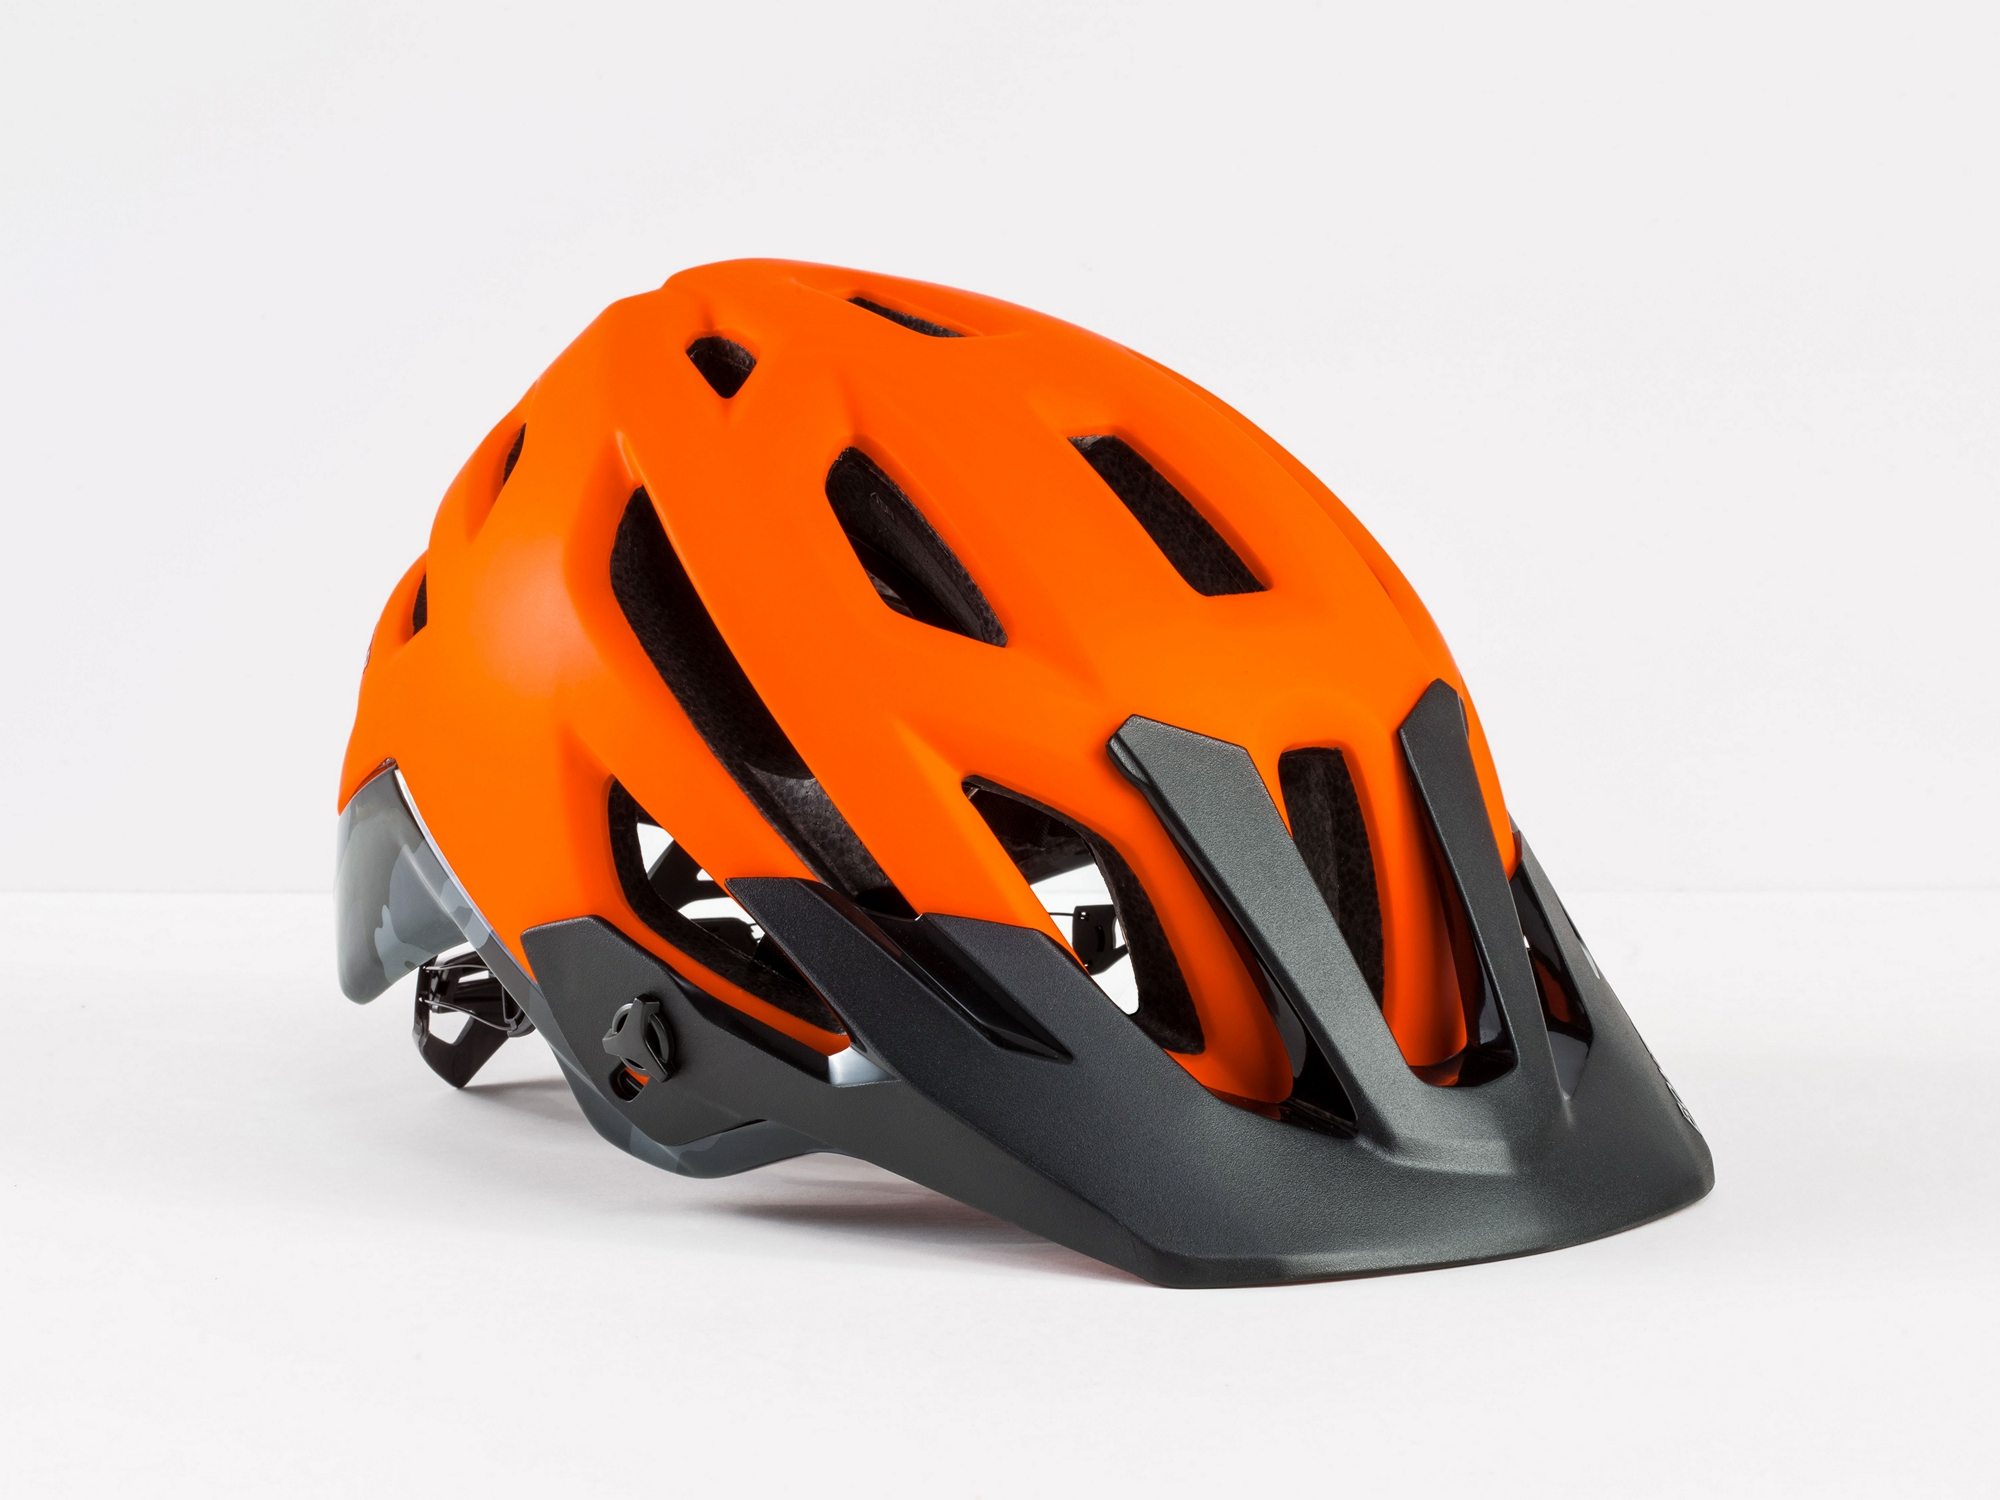 mountain bike helmets uk